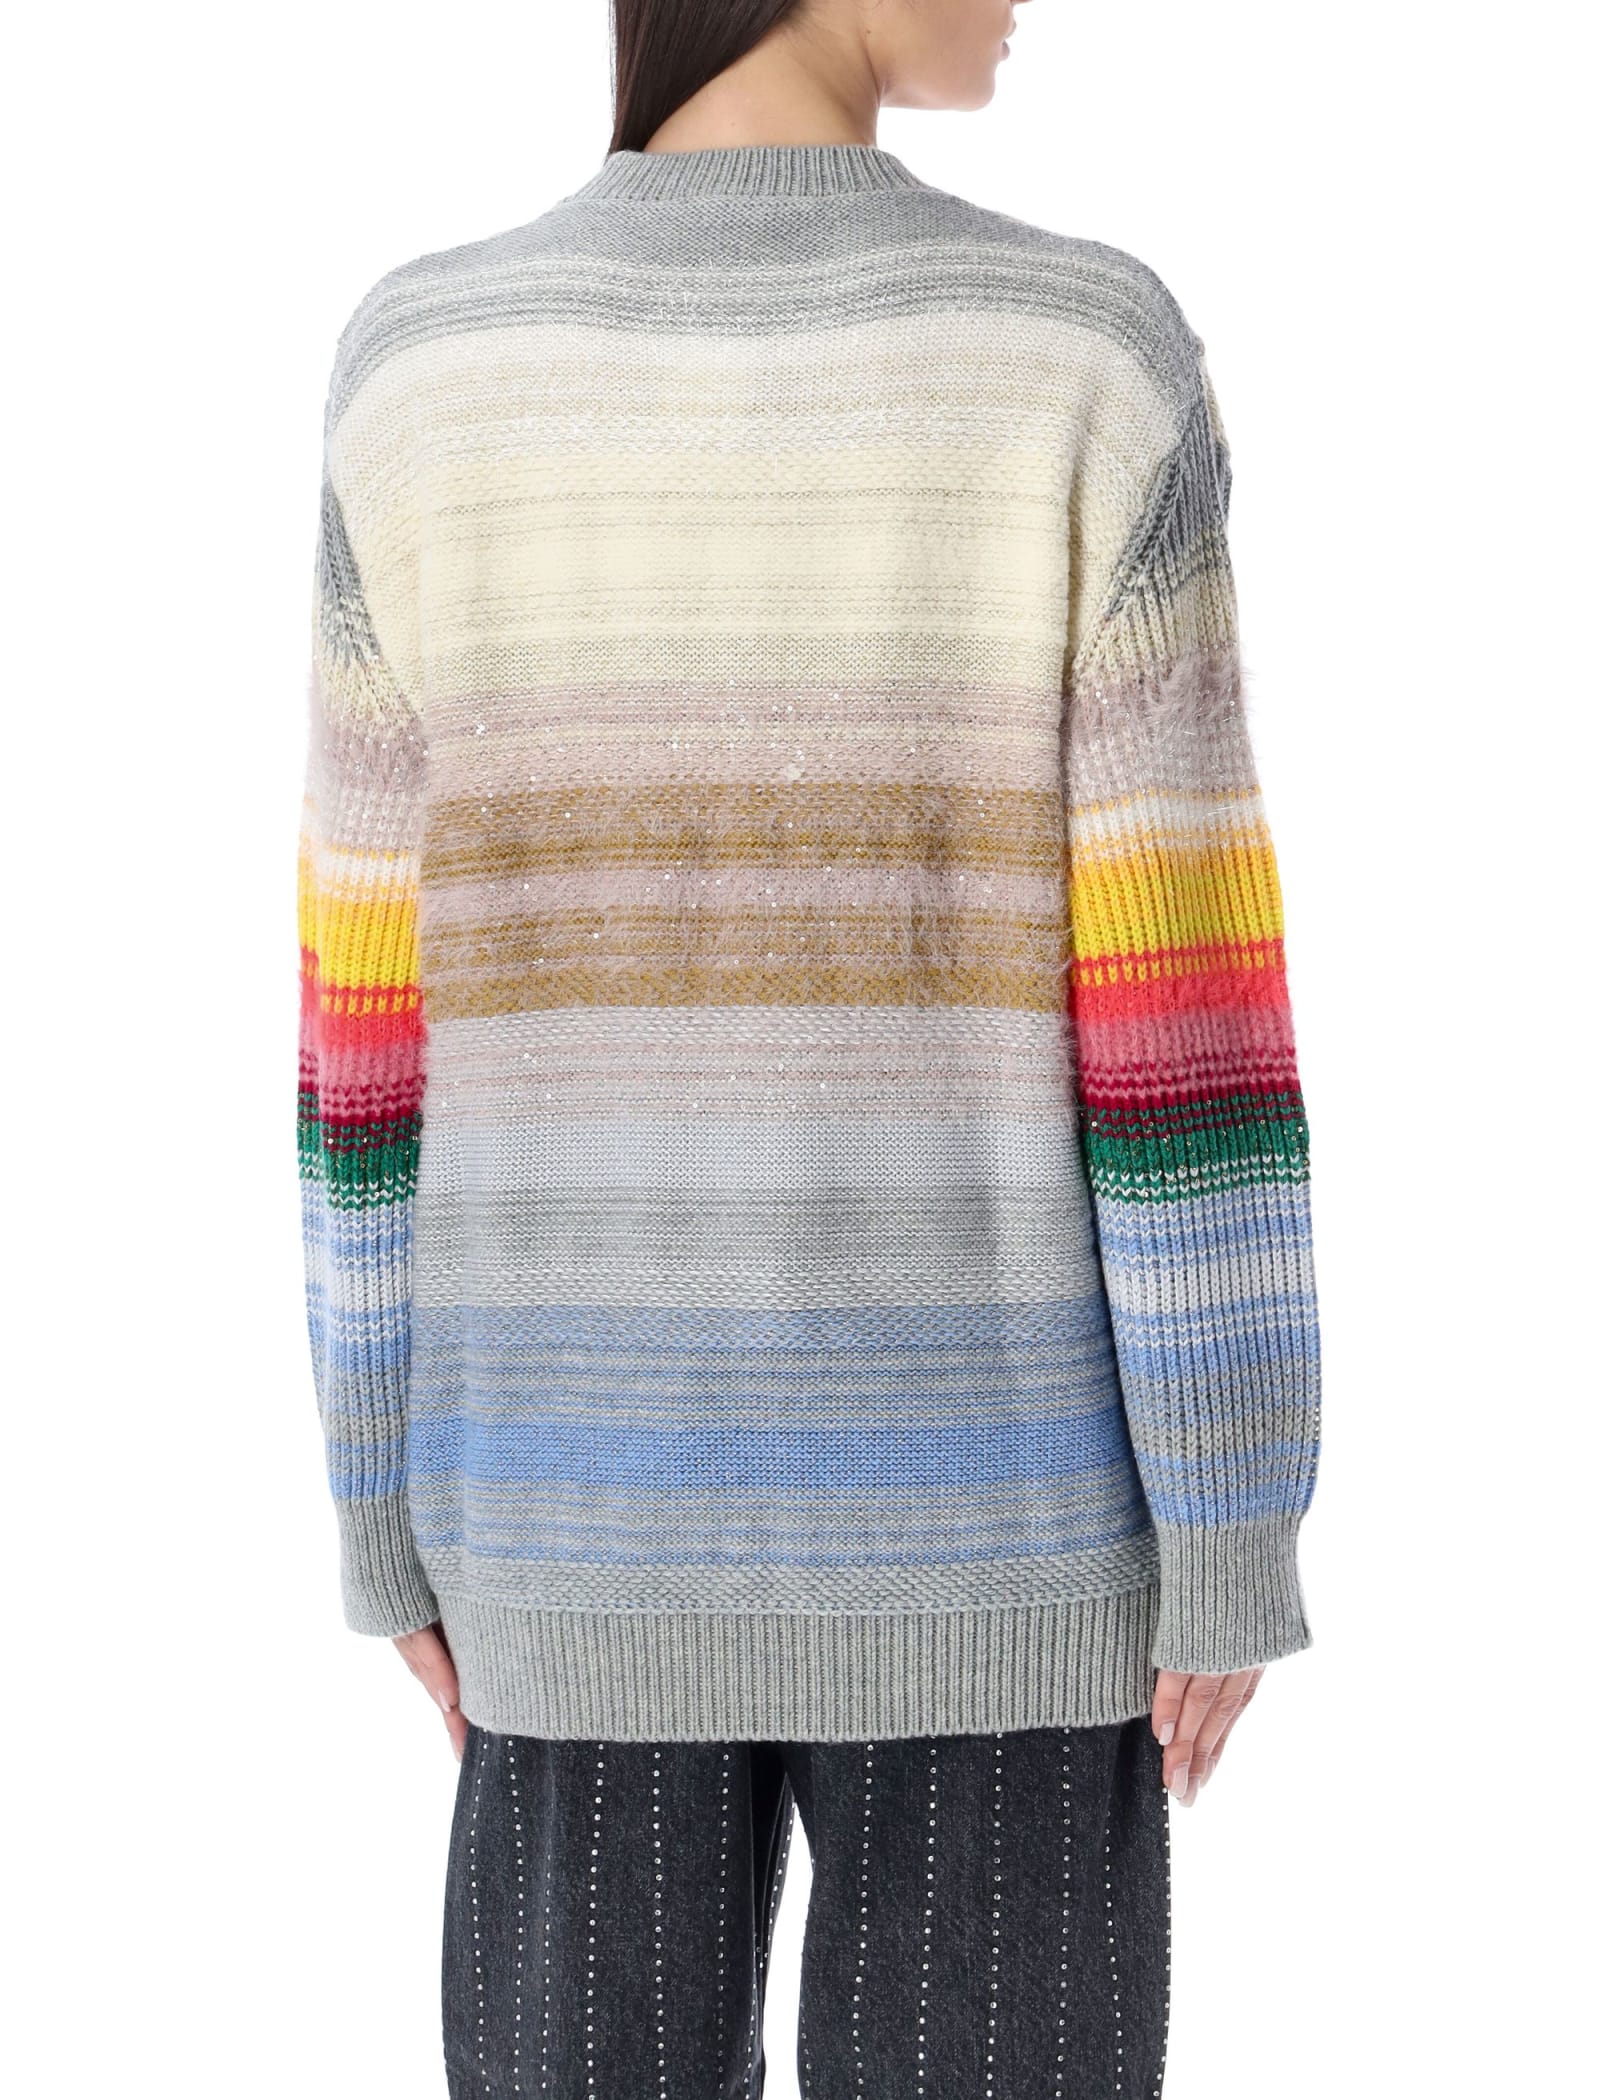 Stella Mccartney Kind Intarsia Sweater - Realry: Your Fashion Search Engine